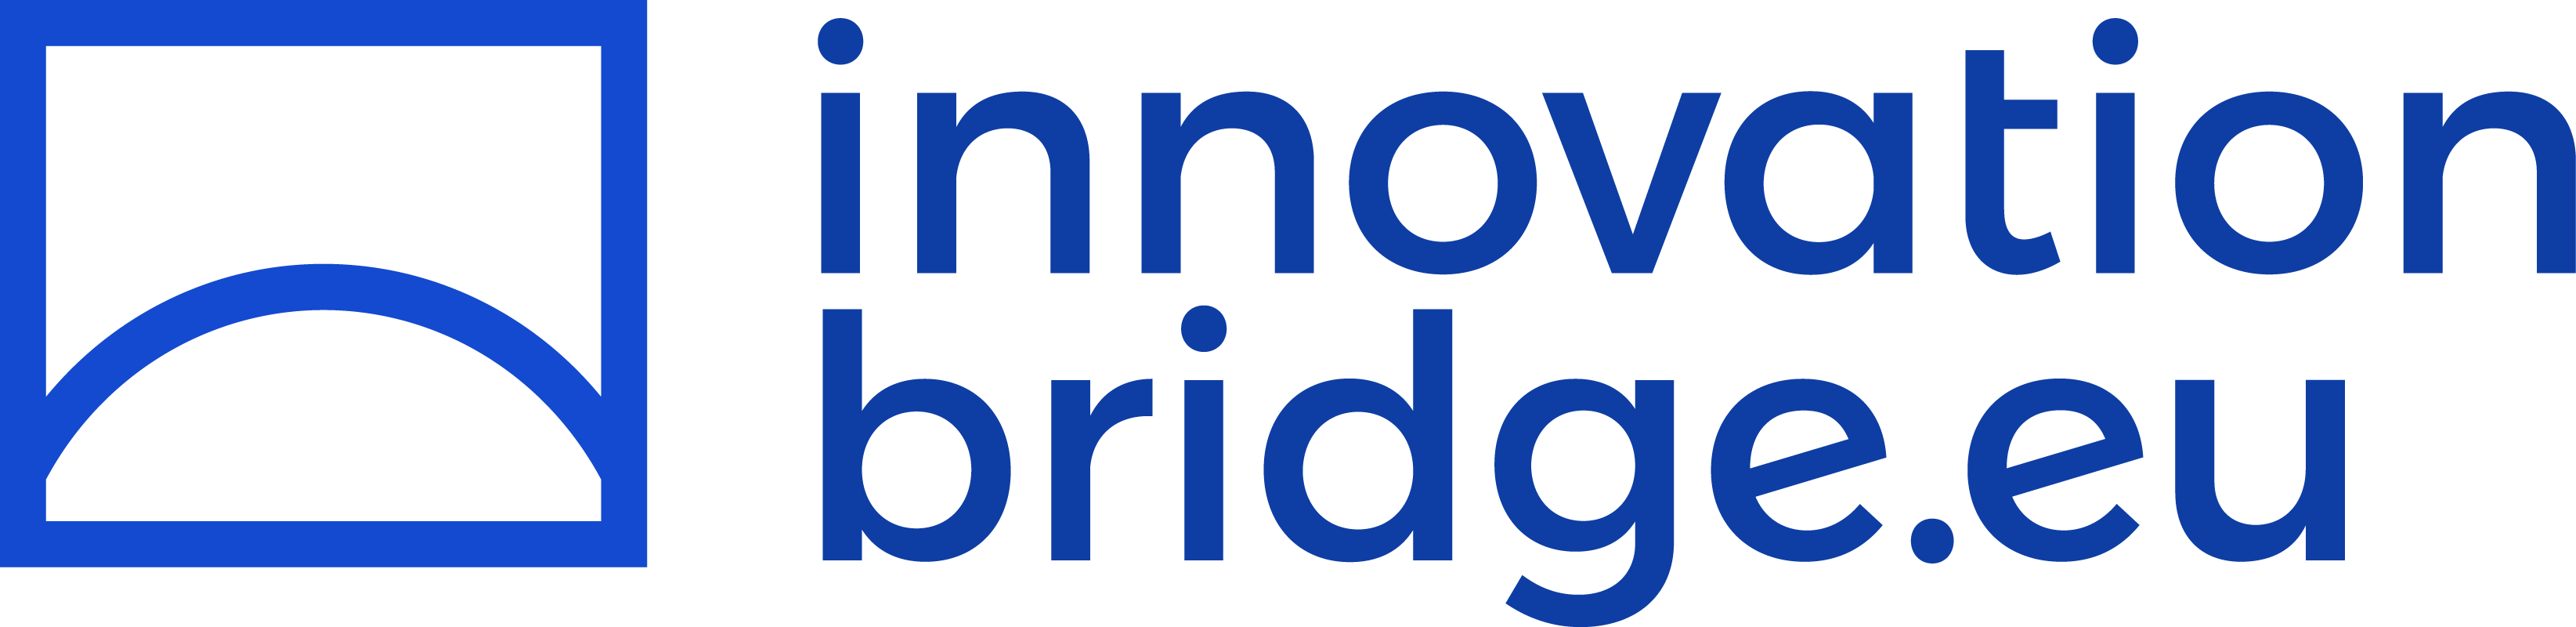 Innovation Bridge